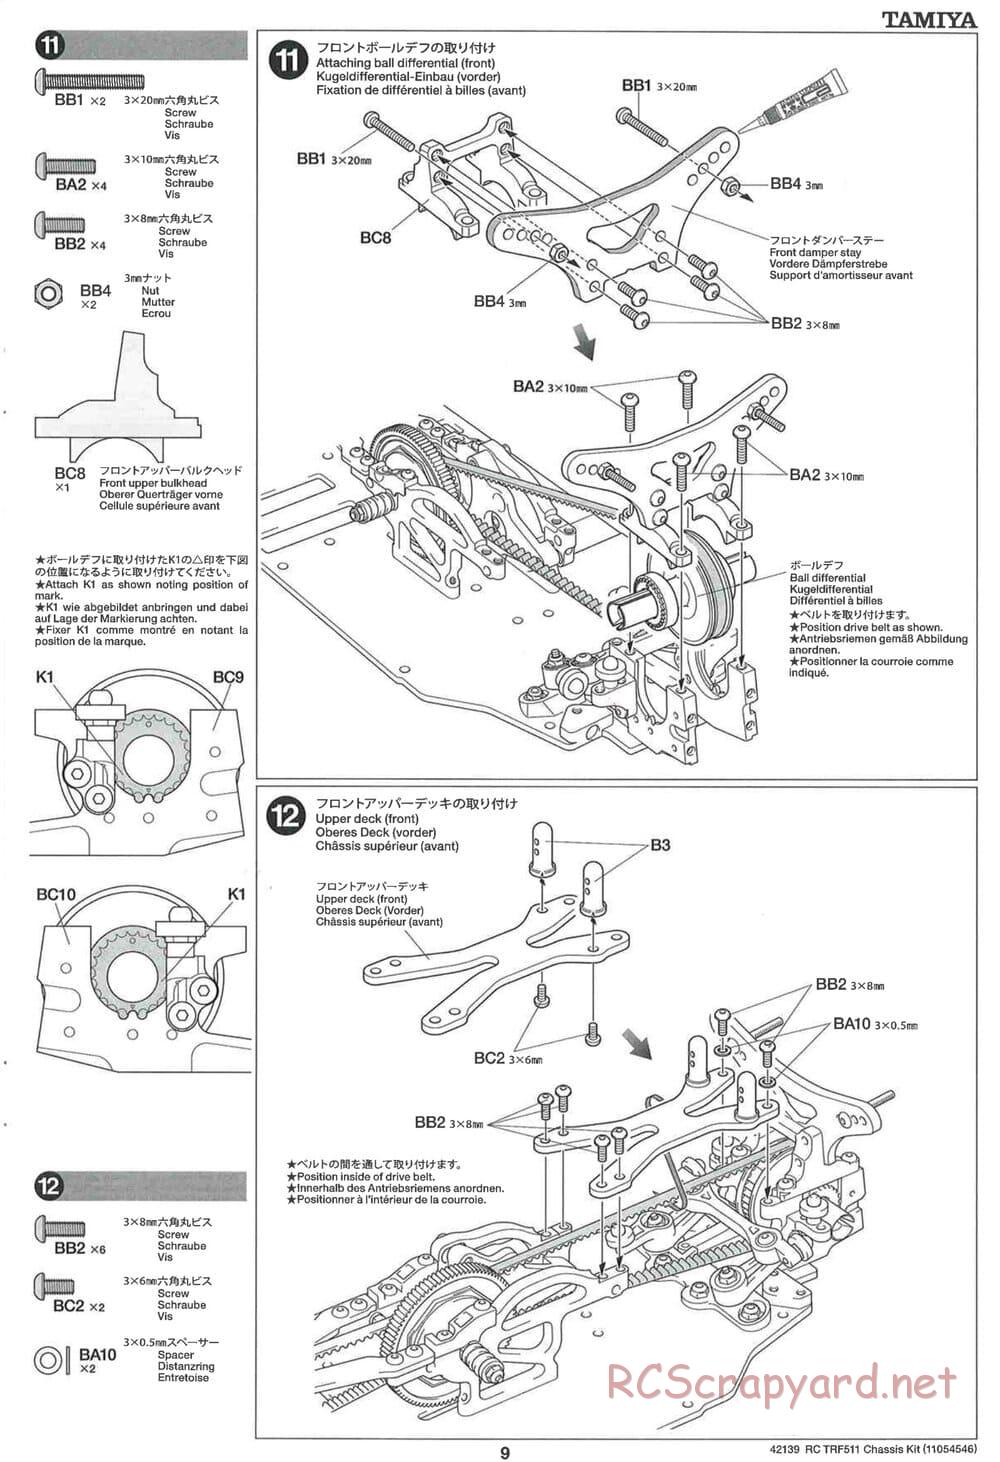 Tamiya - TRF511 Chassis - Manual - Page 9